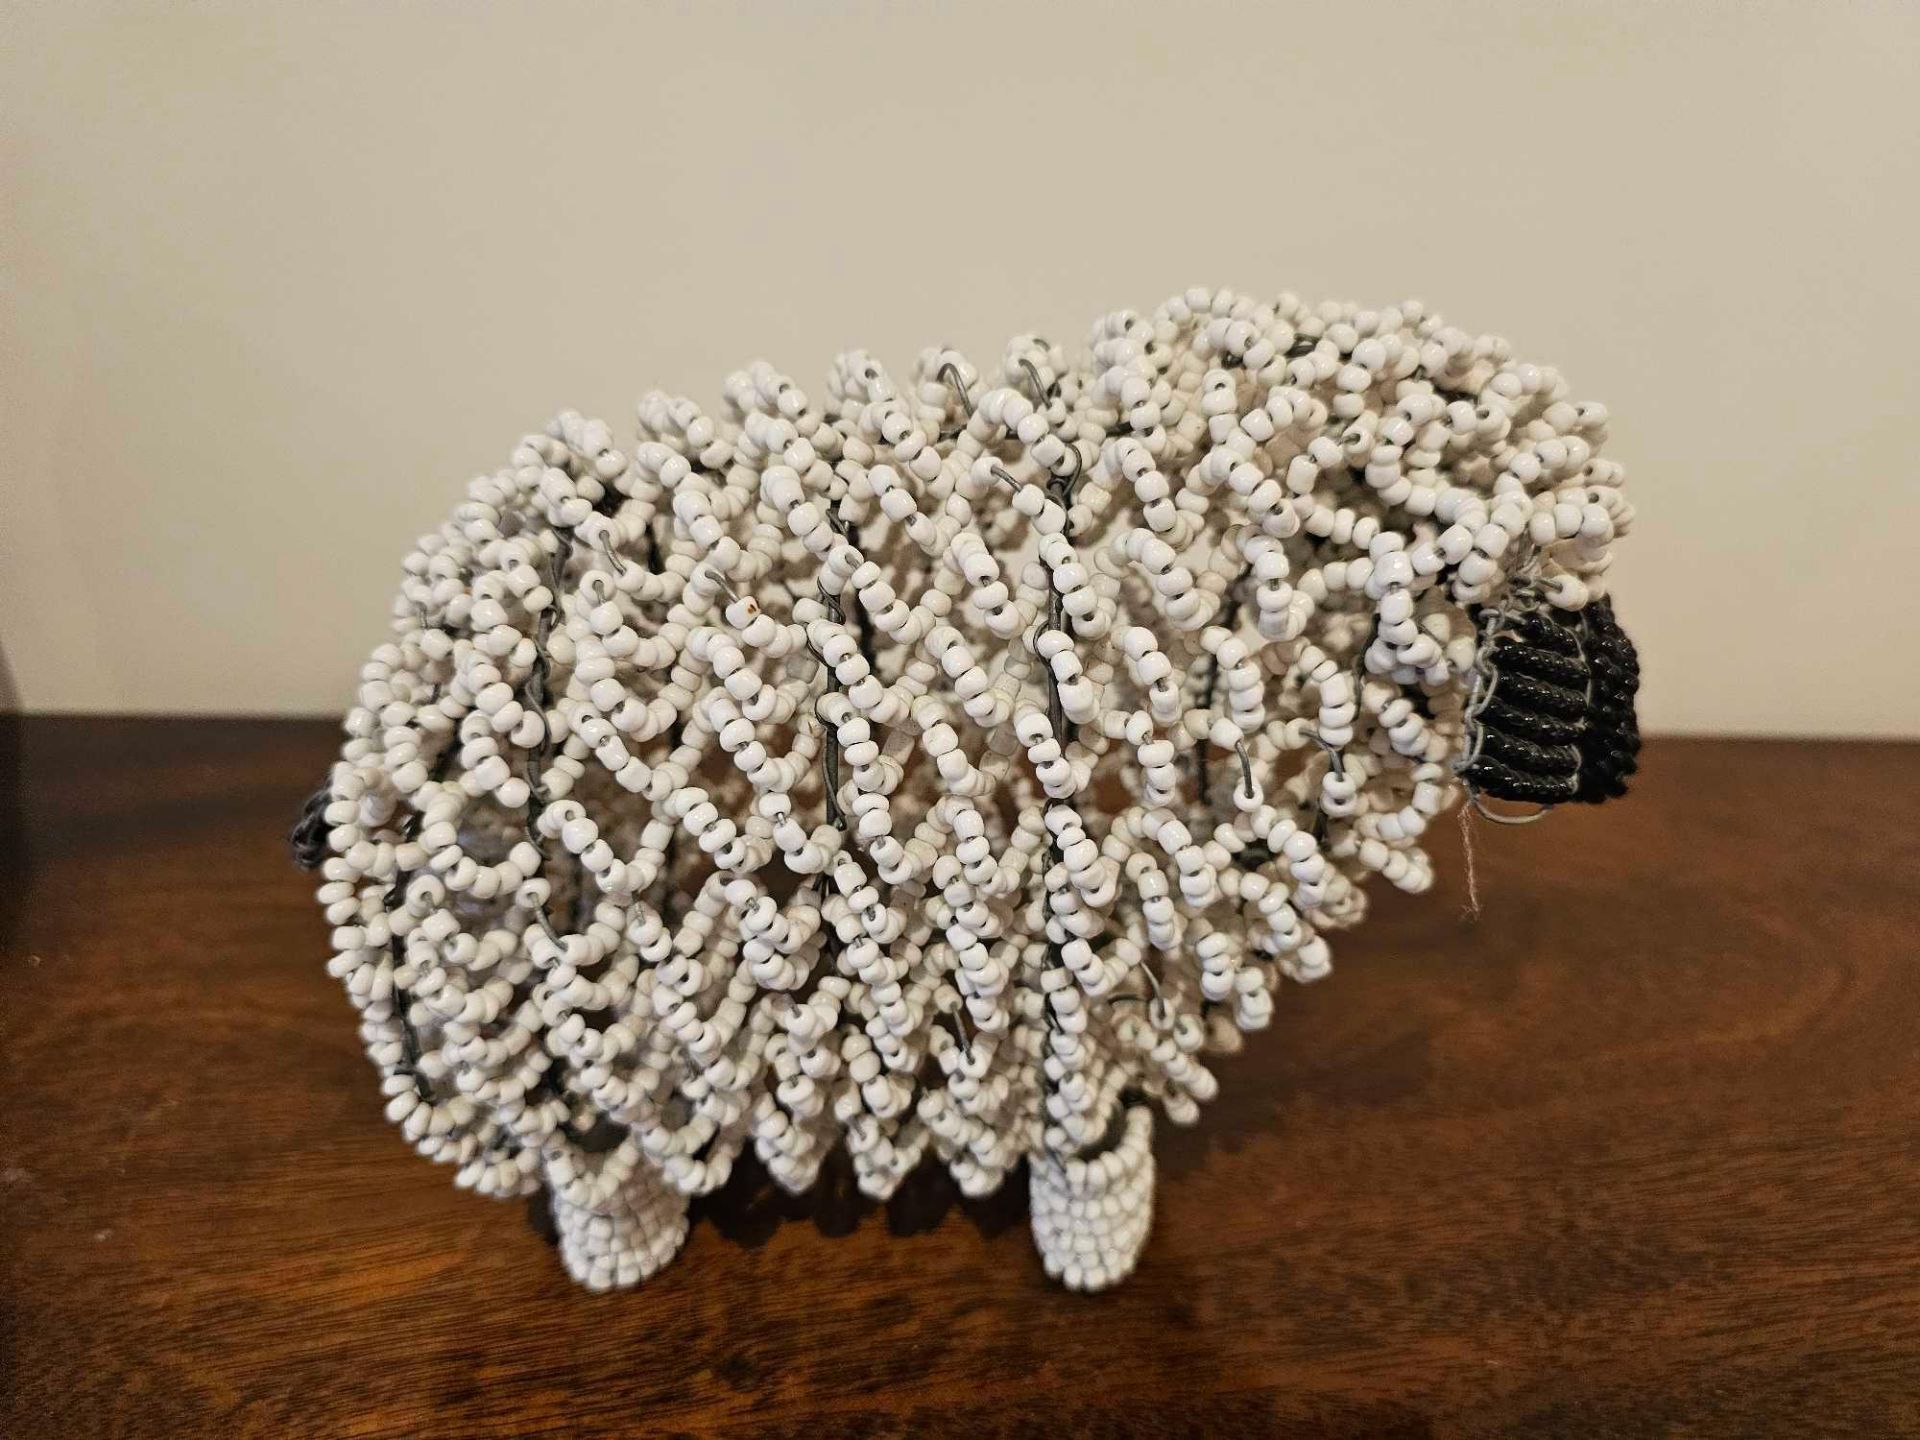 Handmade Beaded Wire Sheep Figurine - Image 3 of 3